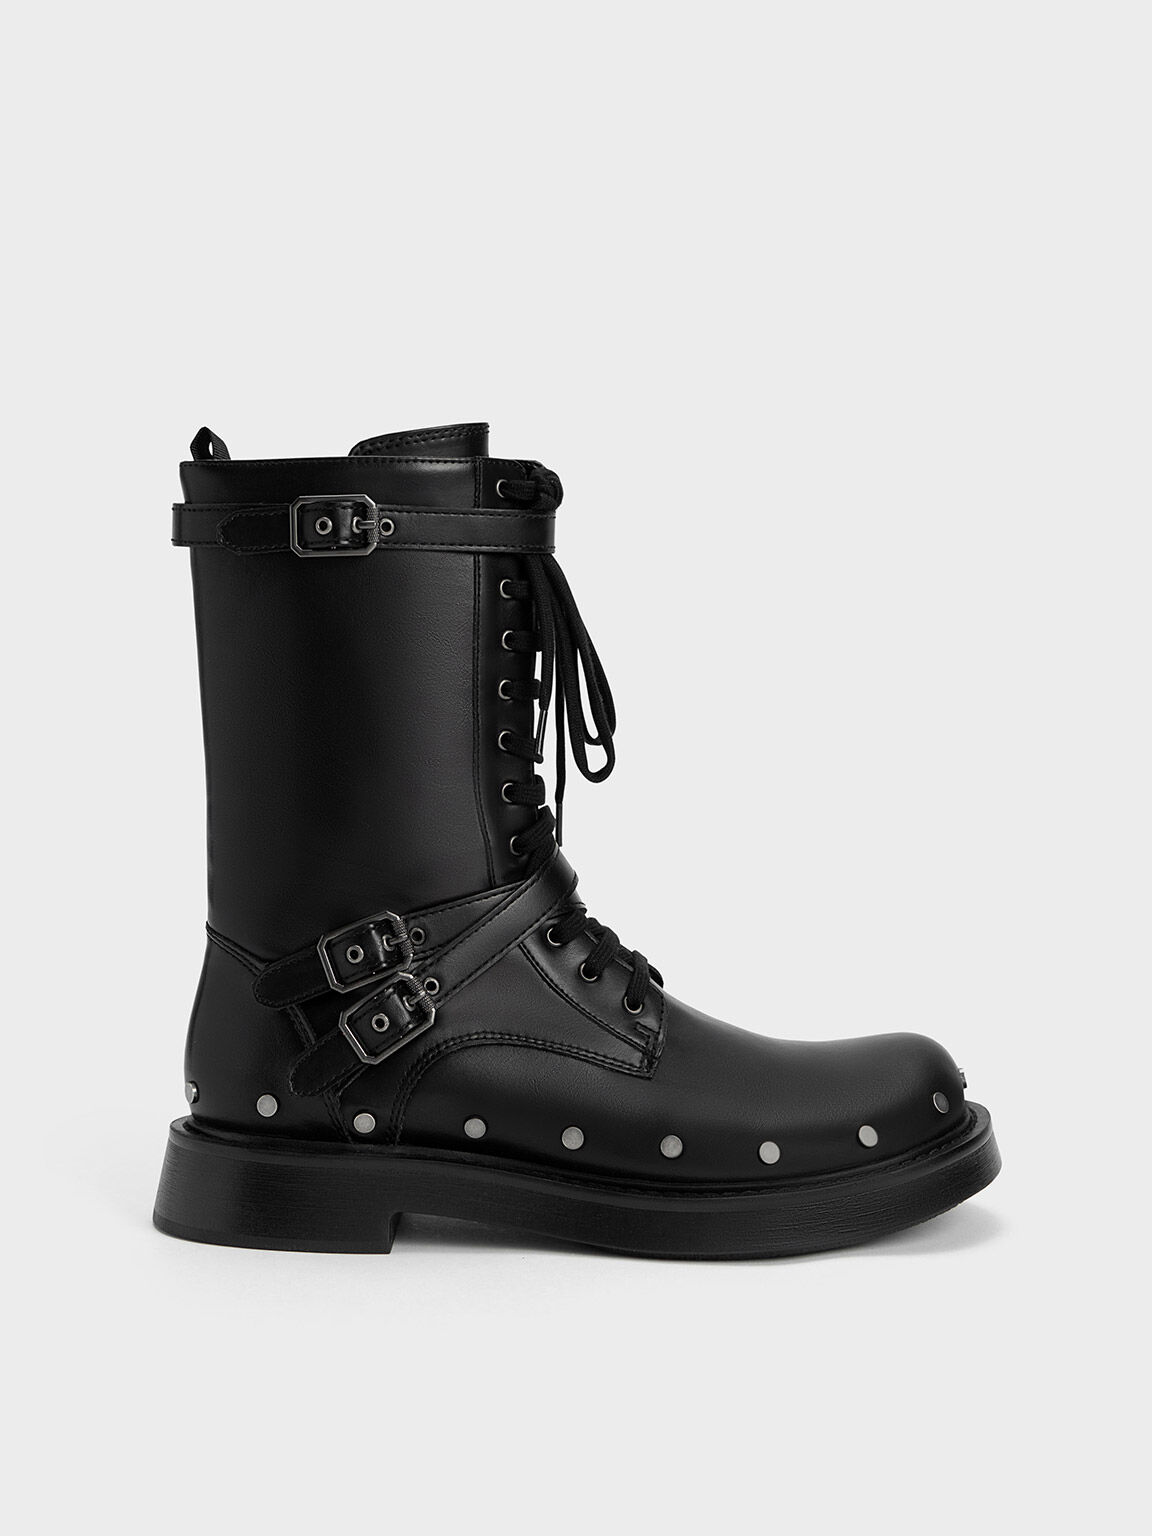 Studded & Buckled Combat Boots, Black, hi-res